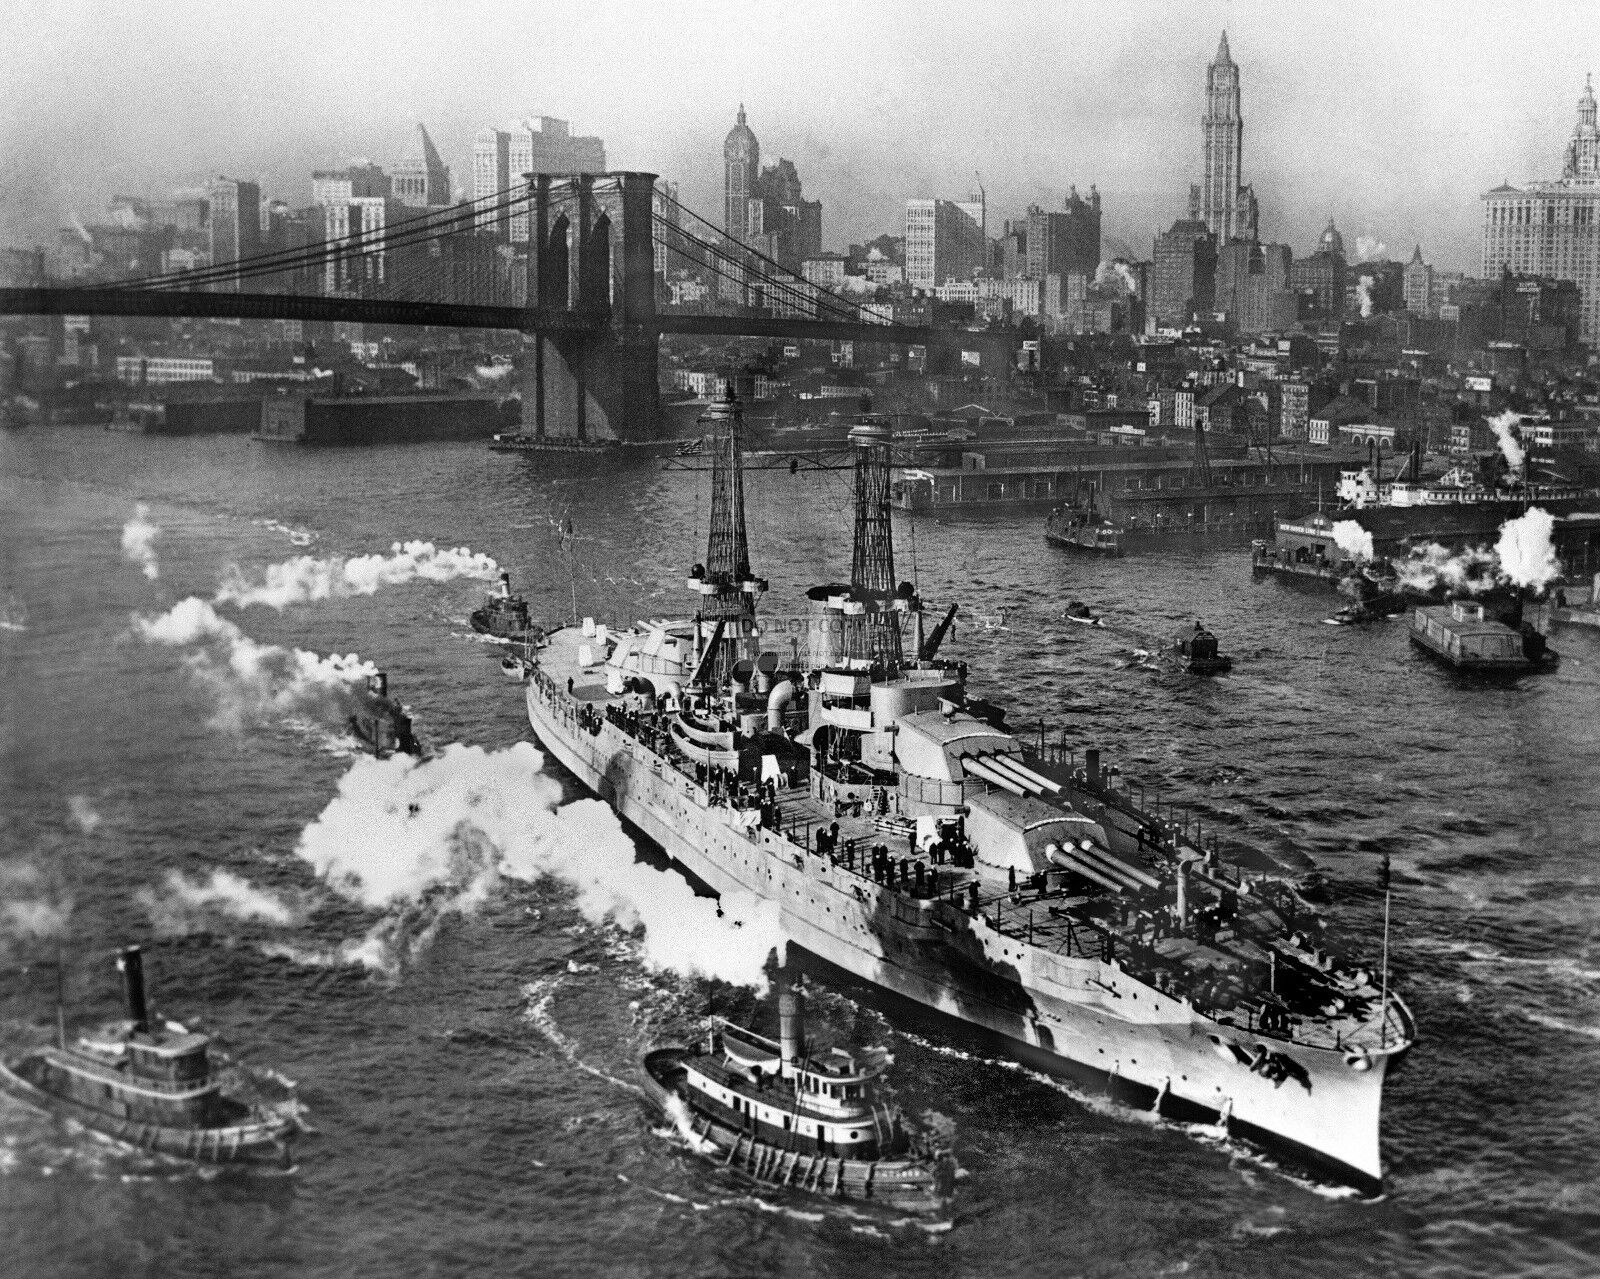 USS ARIZONA ON THE EAST RIVER IN NEW YORK CITY IN 1916 - 8X10 PHOTO (DA-495)